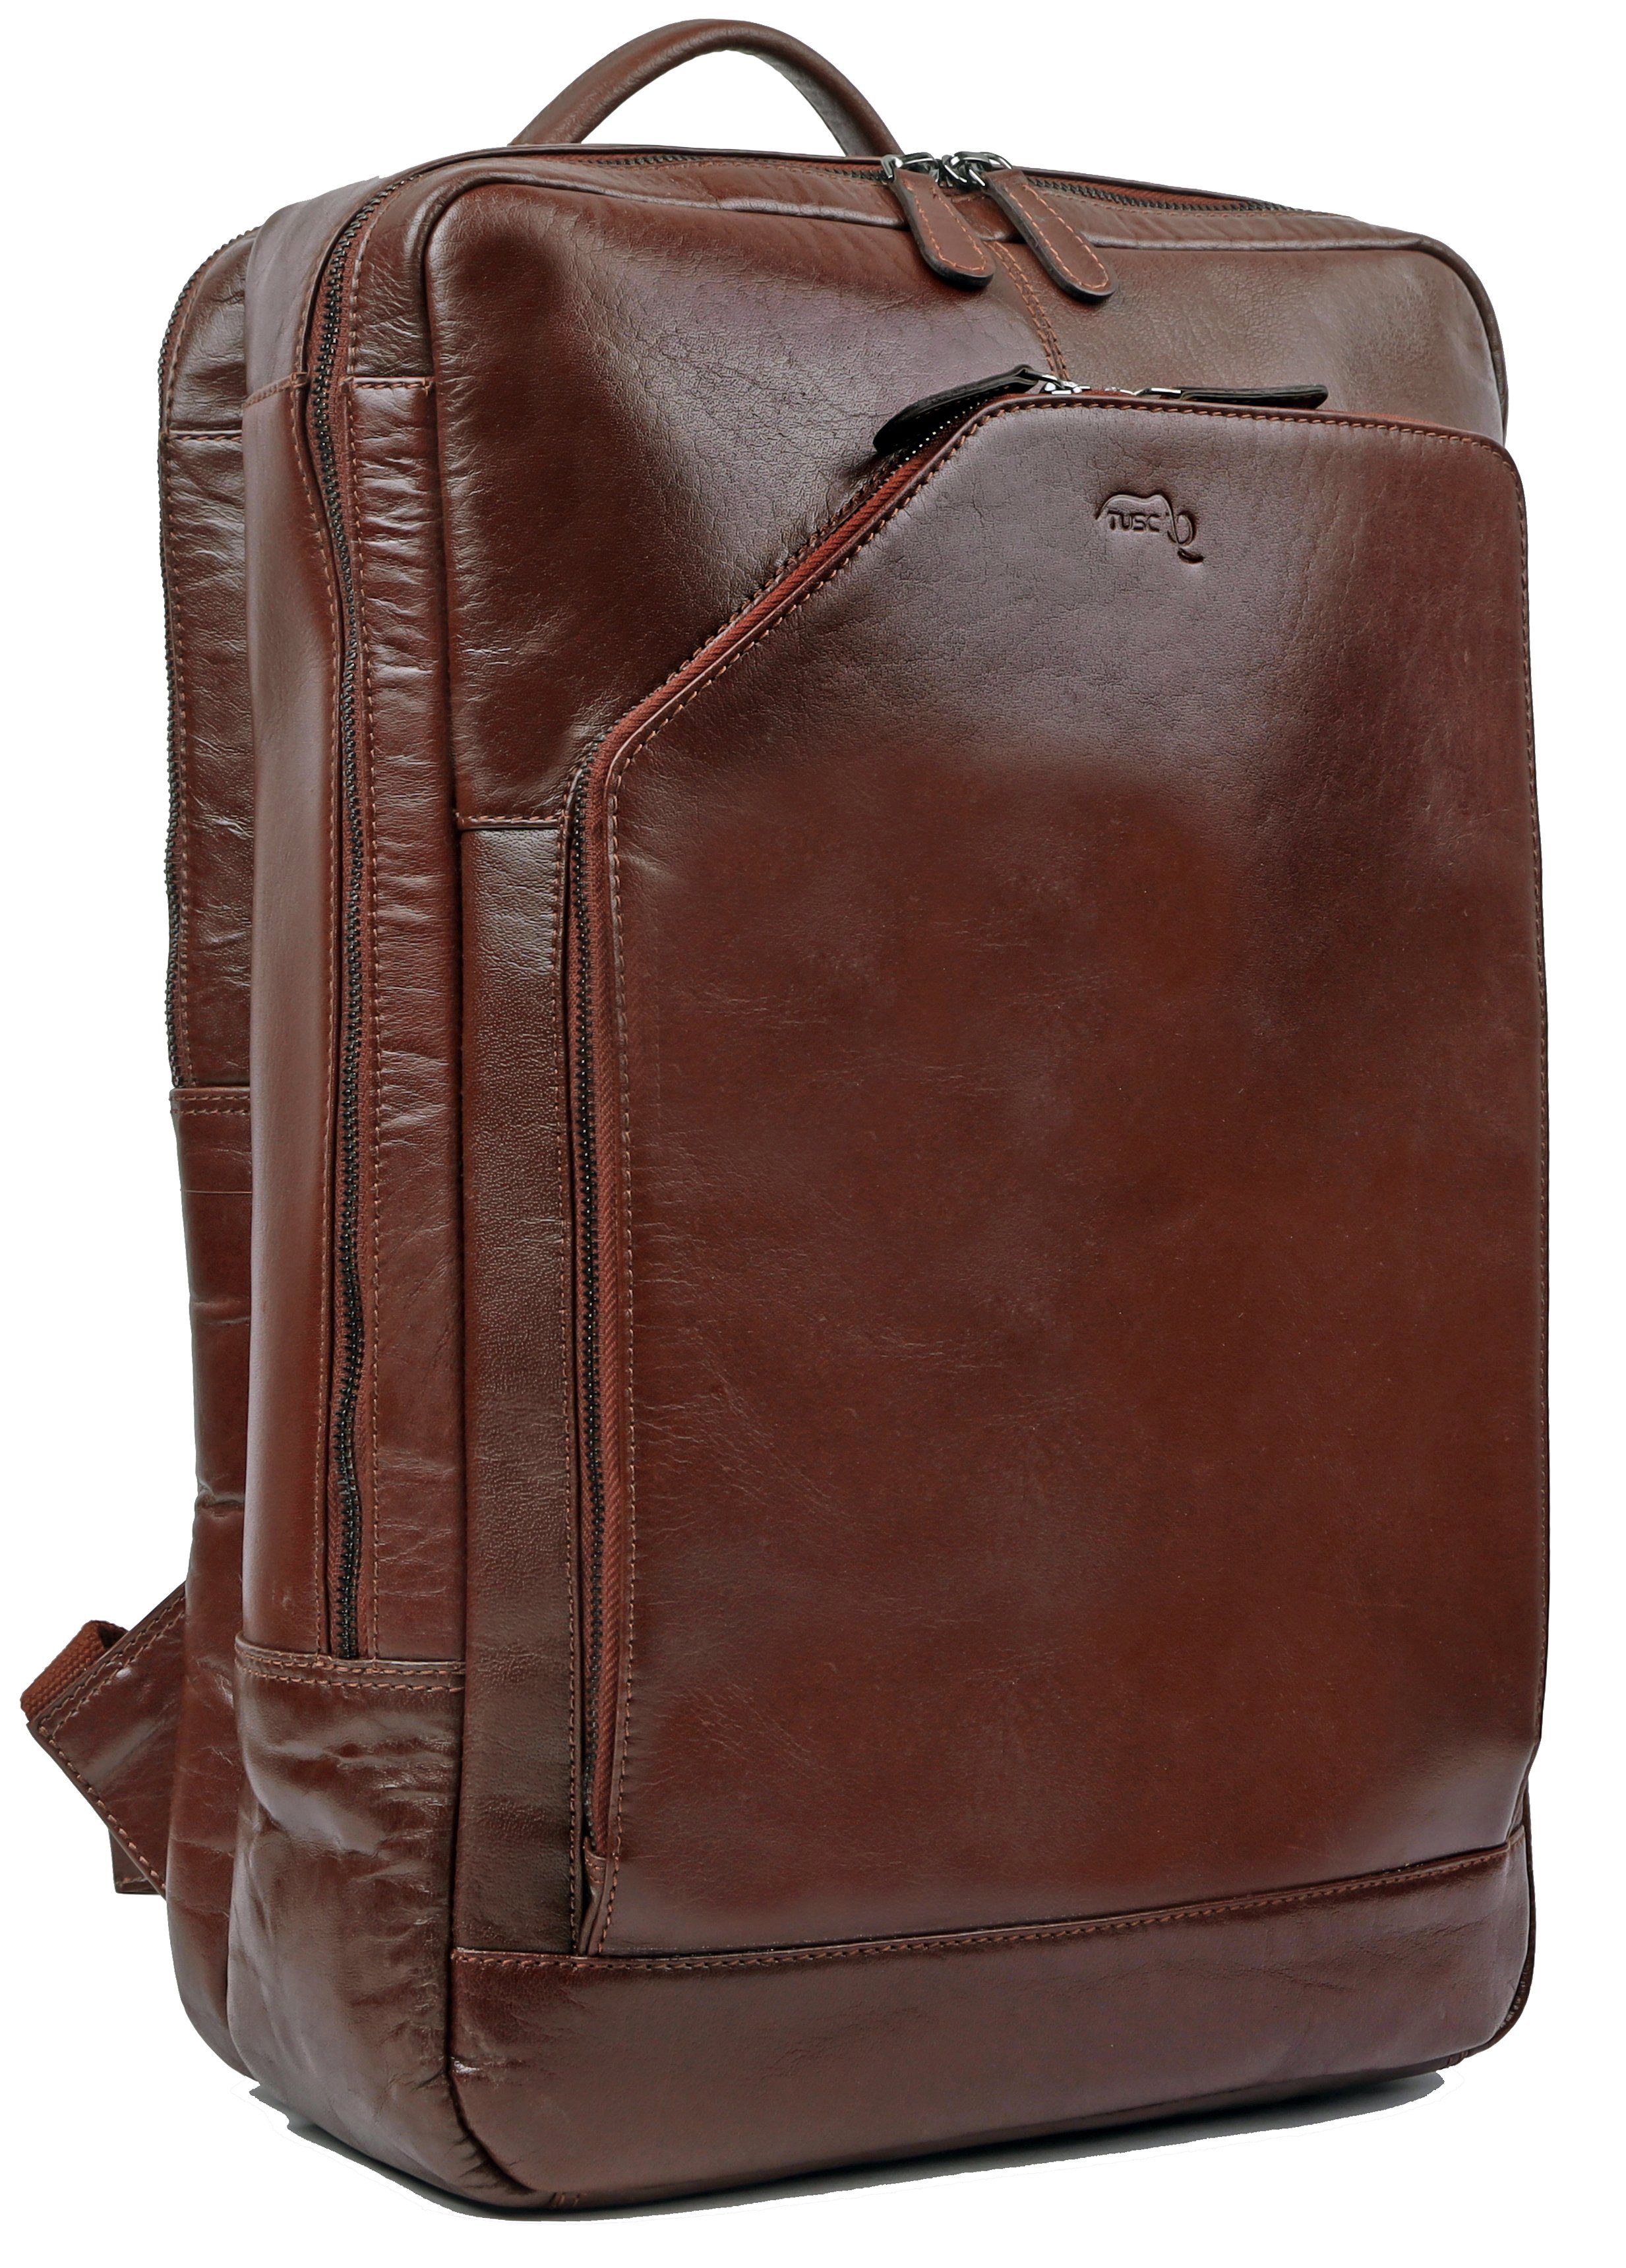 TUSC Tagesrucksack Corvus 17L, Premium Rucksack aus Leder für Laptop bis 17,3 Zoll. Cinnamon